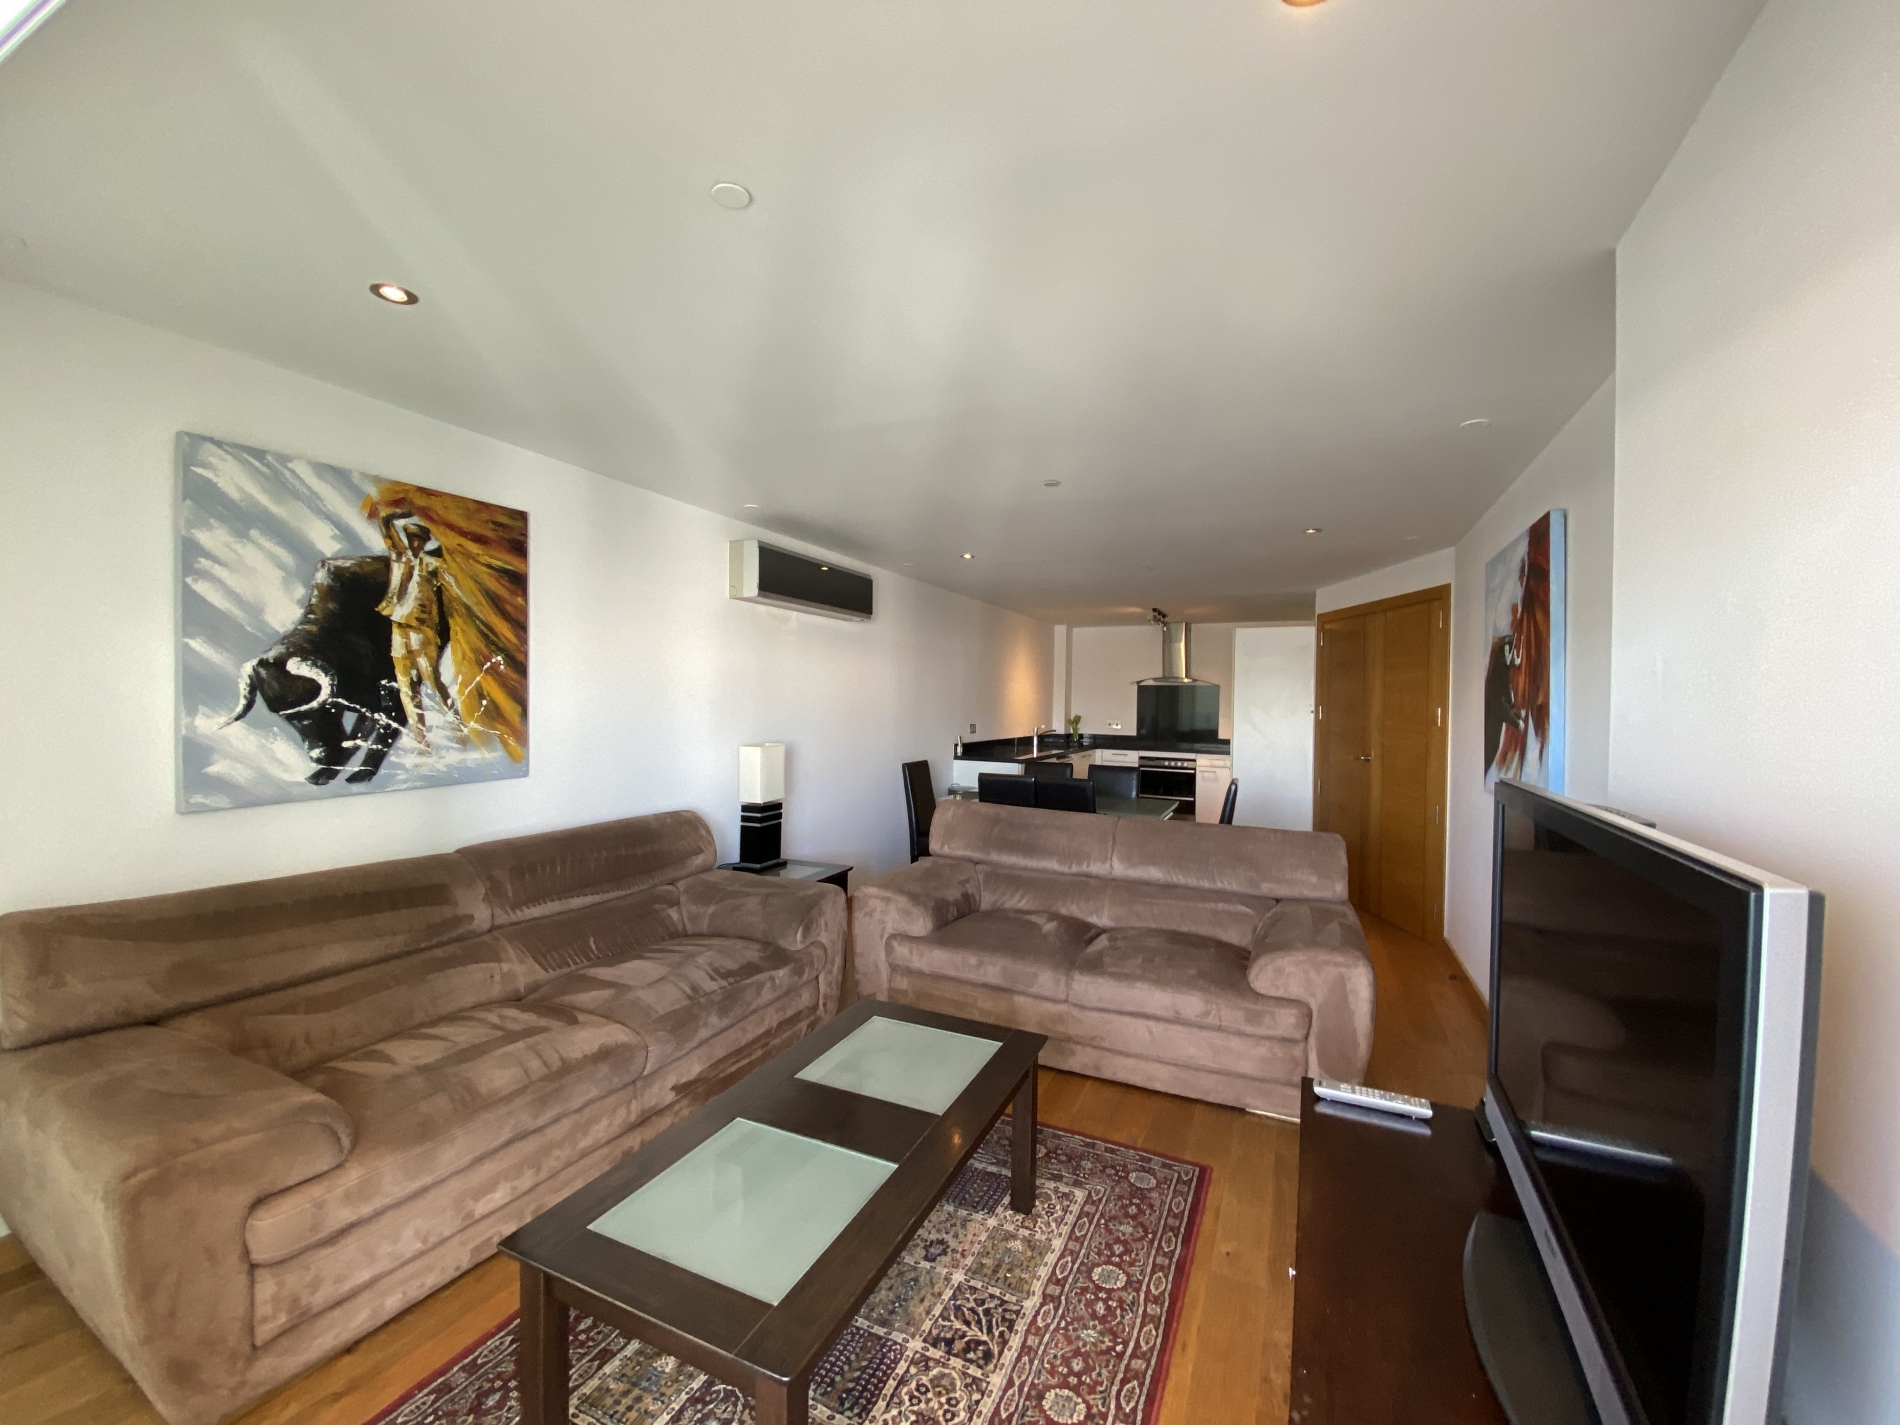 3 Bedroom Apartment For Rental In Grand Ocean Plaza Gibraltar